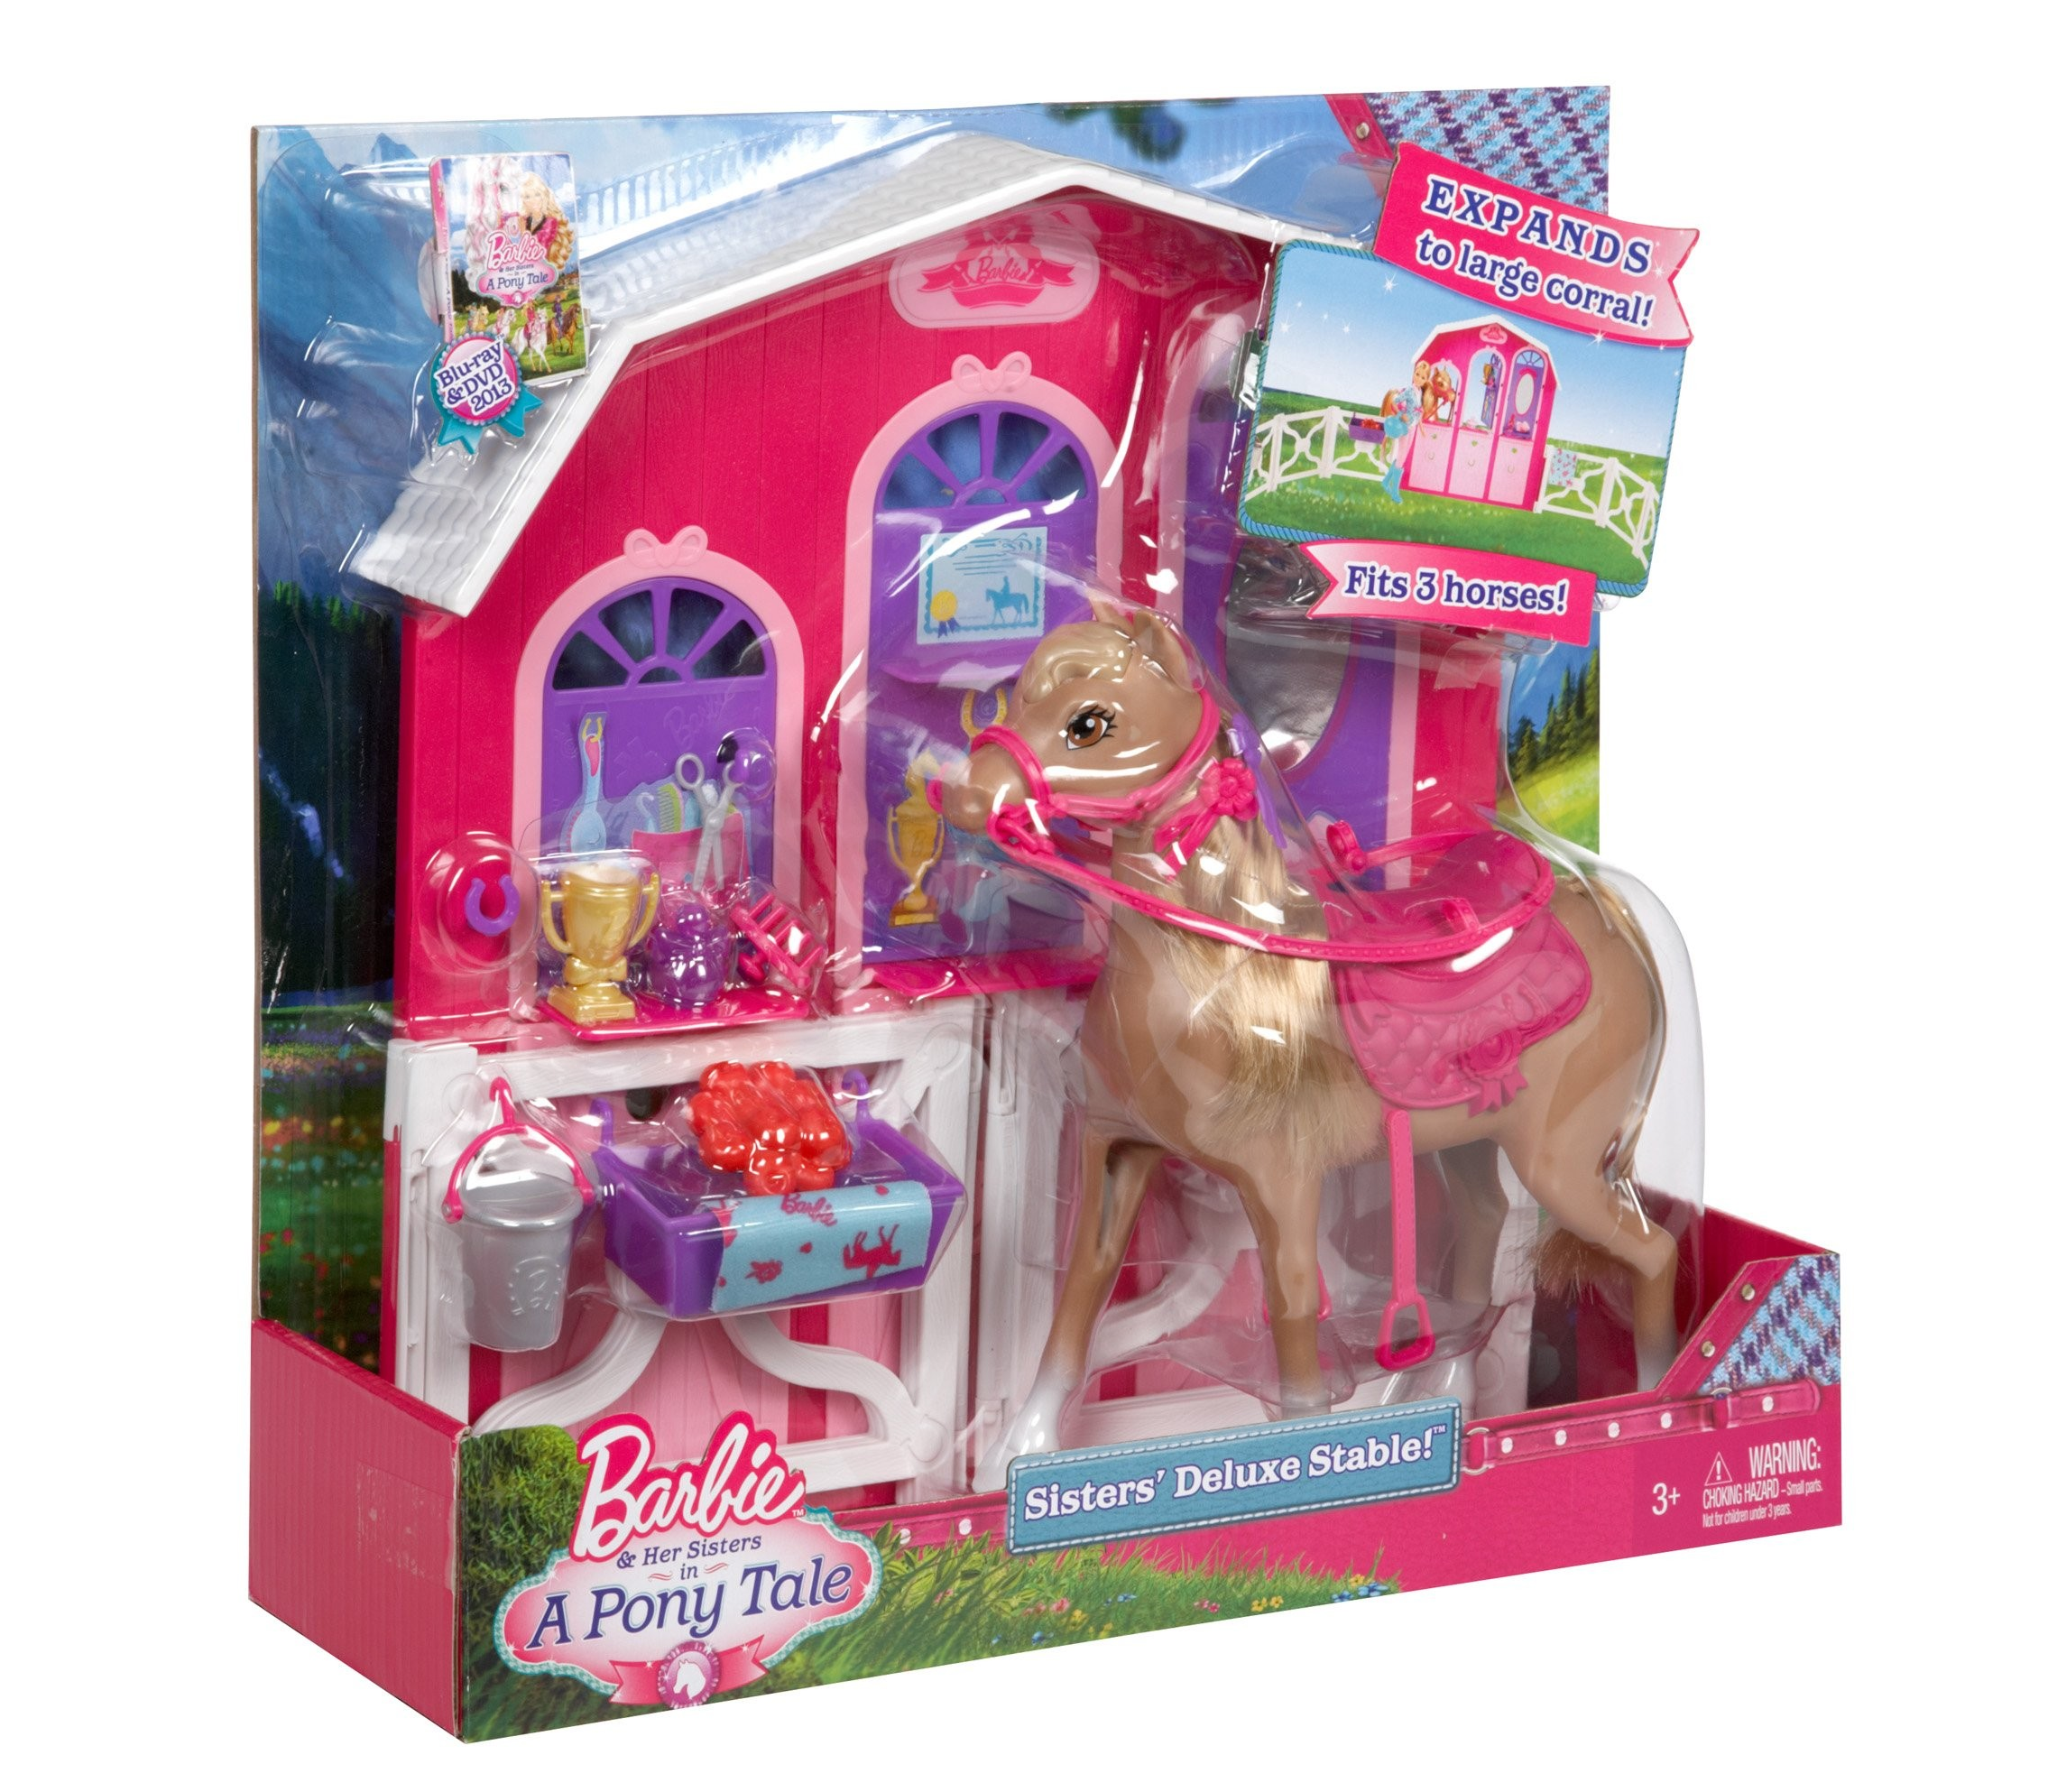 Конюшня пони. Барби набор конюшня. Barbie 7554 конюшня с лошадкой с м/ф "Барби в сказке о пони". Конюшня Барби с лошадьми. Барби с лошадкой поняшкой и конюшней.